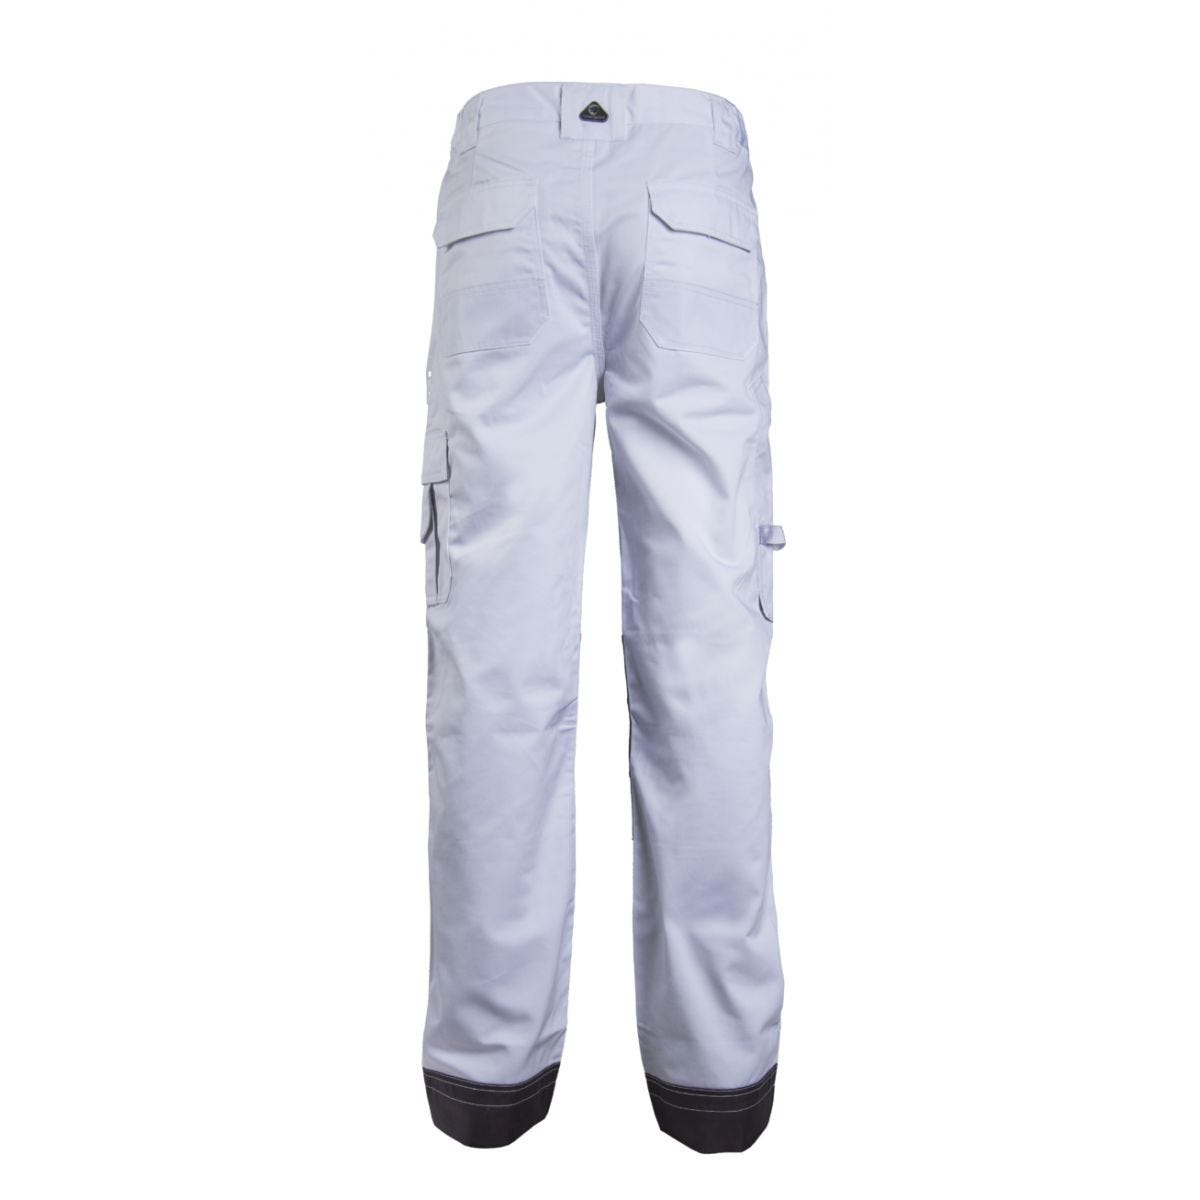 Pantalon CLASS blanc - COVERGUARD - Taille S 1